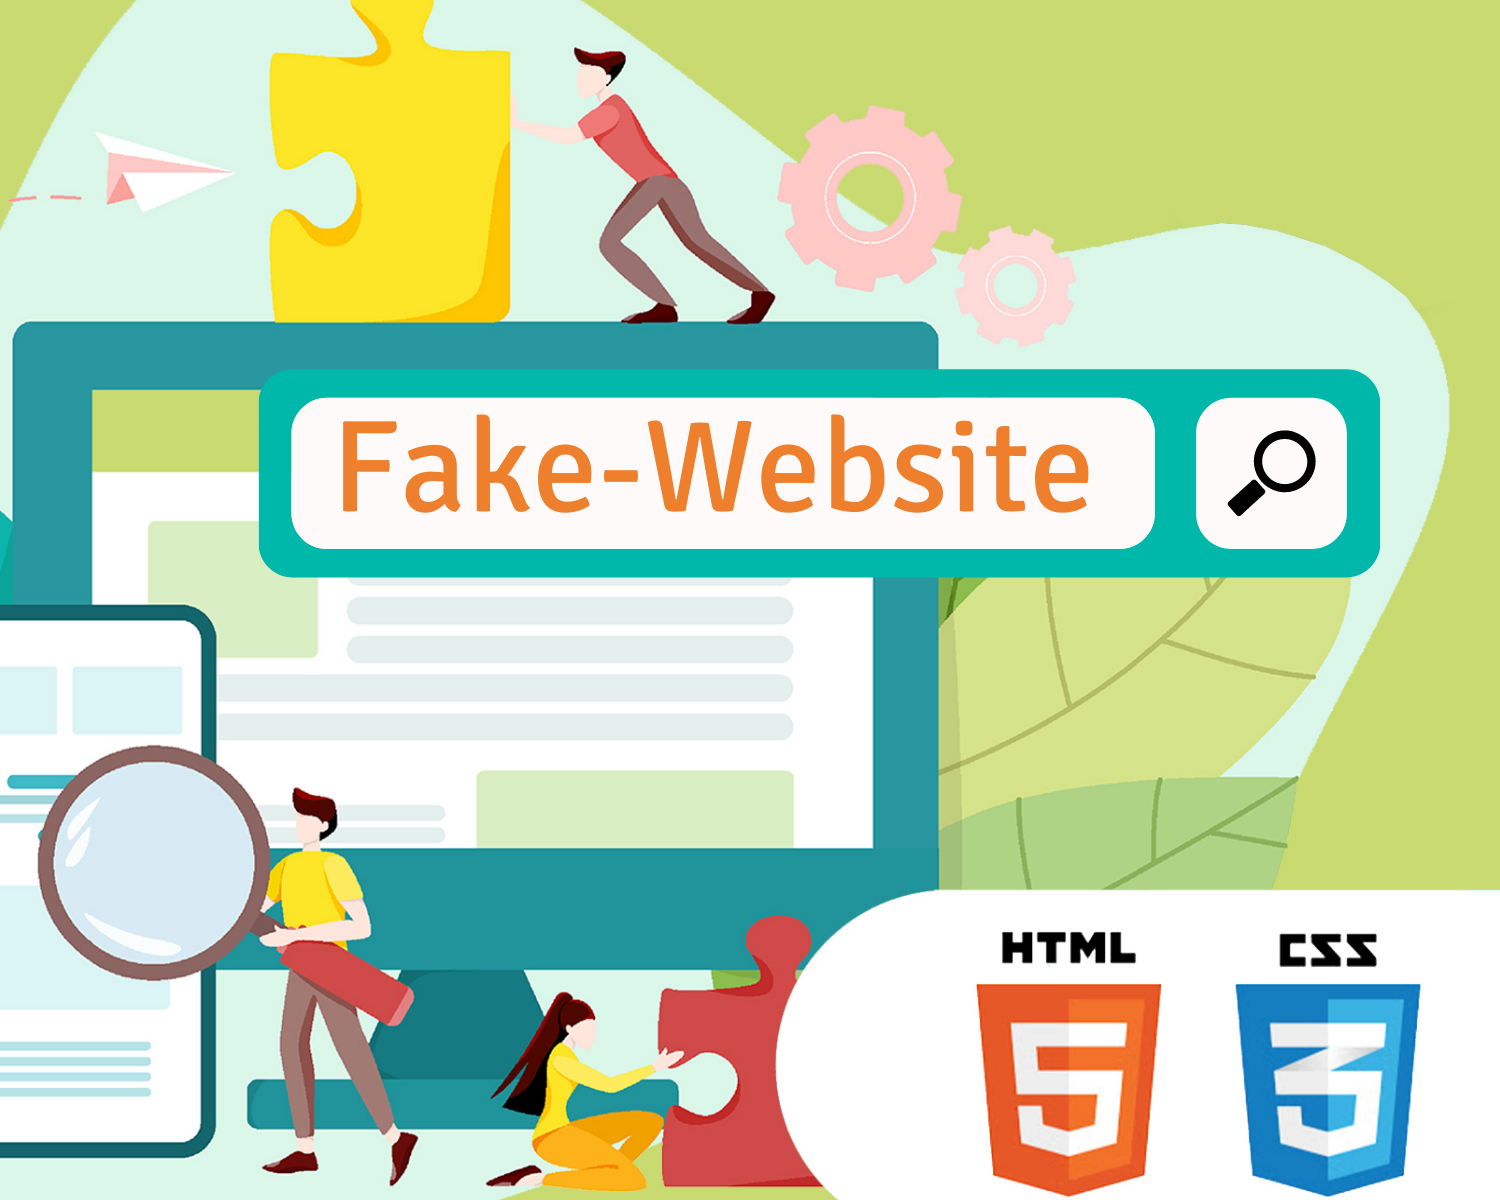 Fake-Website (HTML)